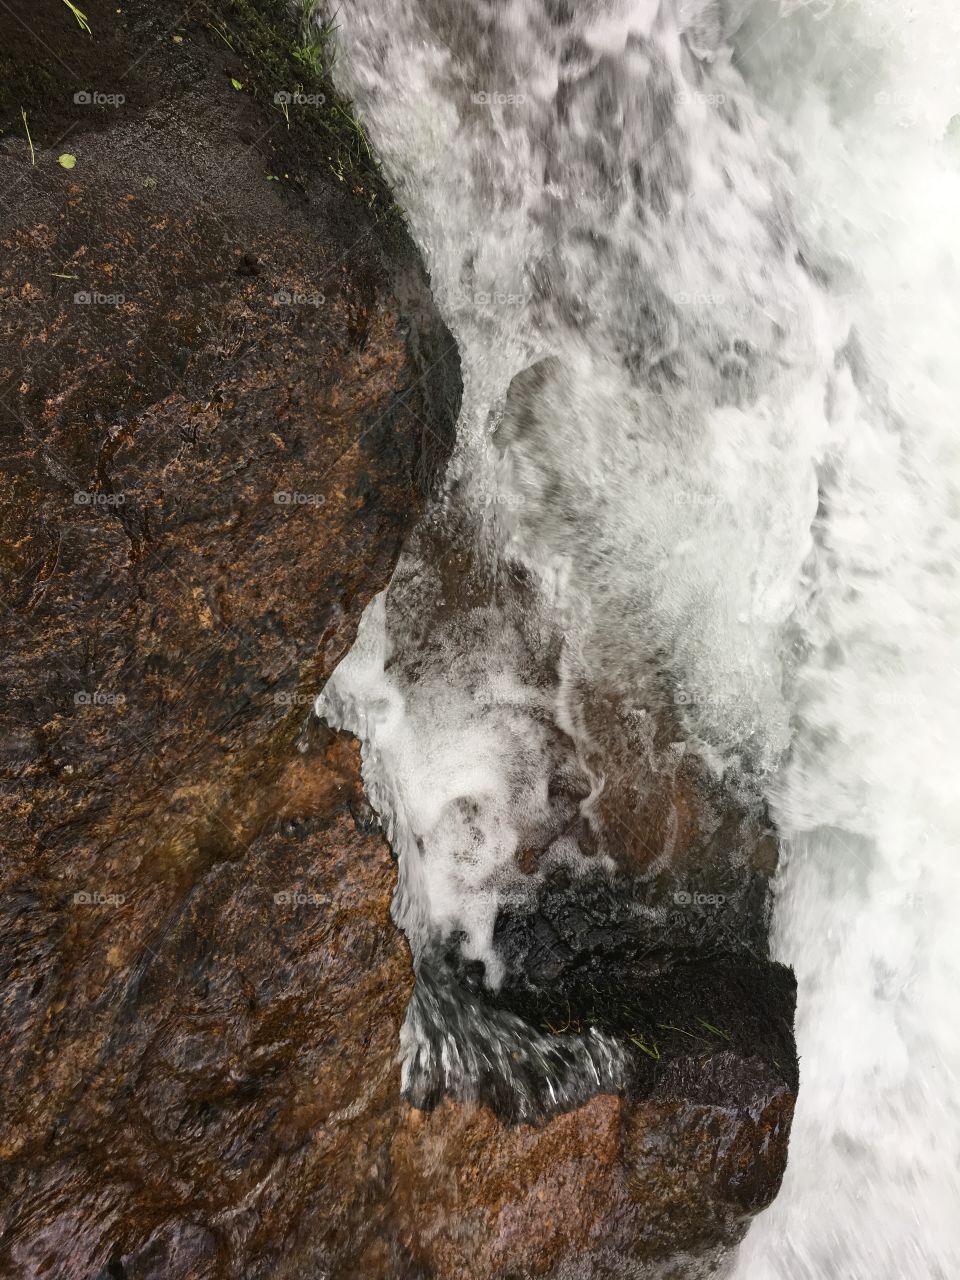 Small river passing throw rocks